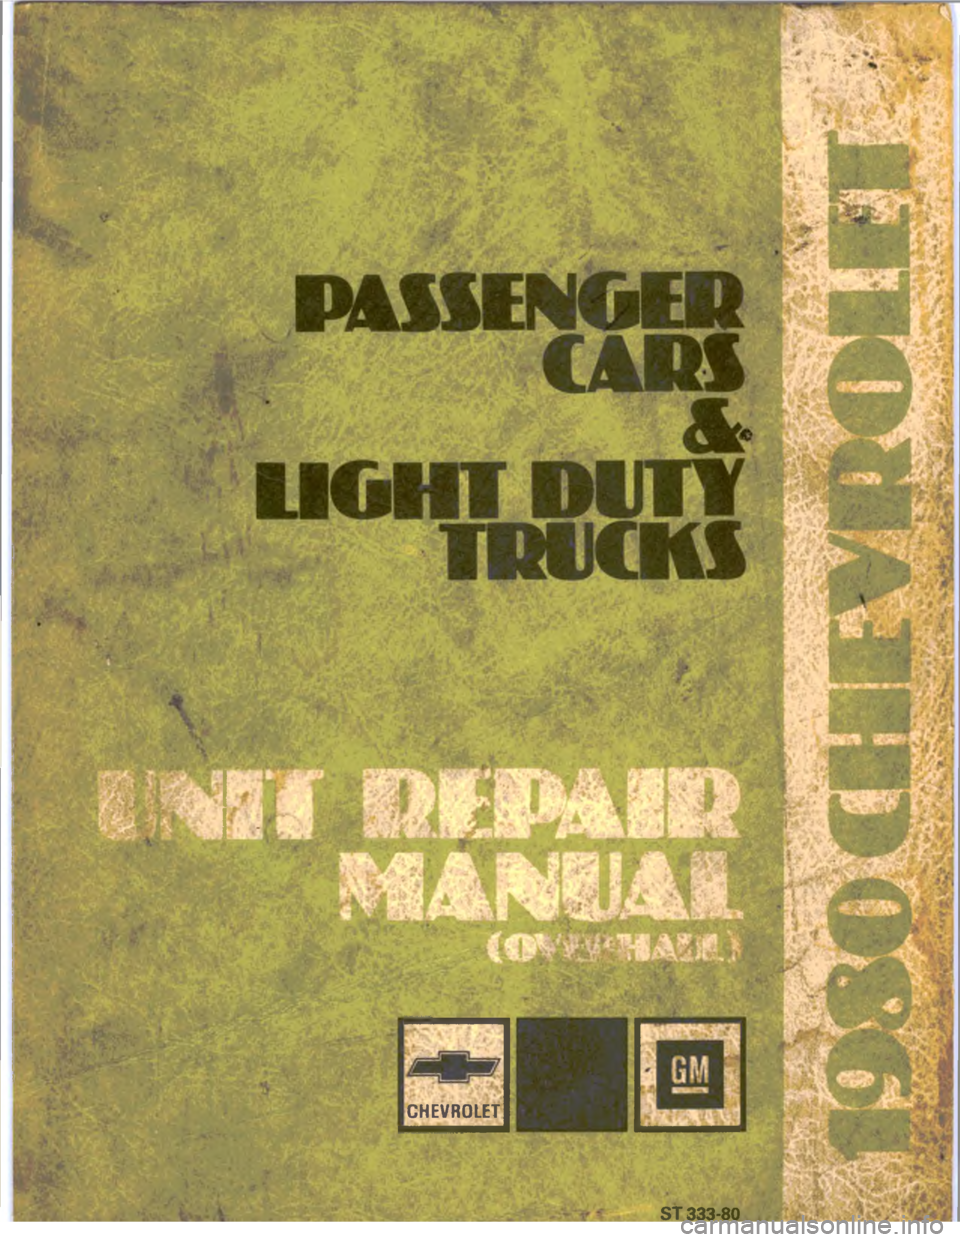 CHEVROLET LIGHT DUTY TRUCK 1980  Repair Everhaul Manual Downloaded from www.Manualslib.com manuals search engine 	
	  